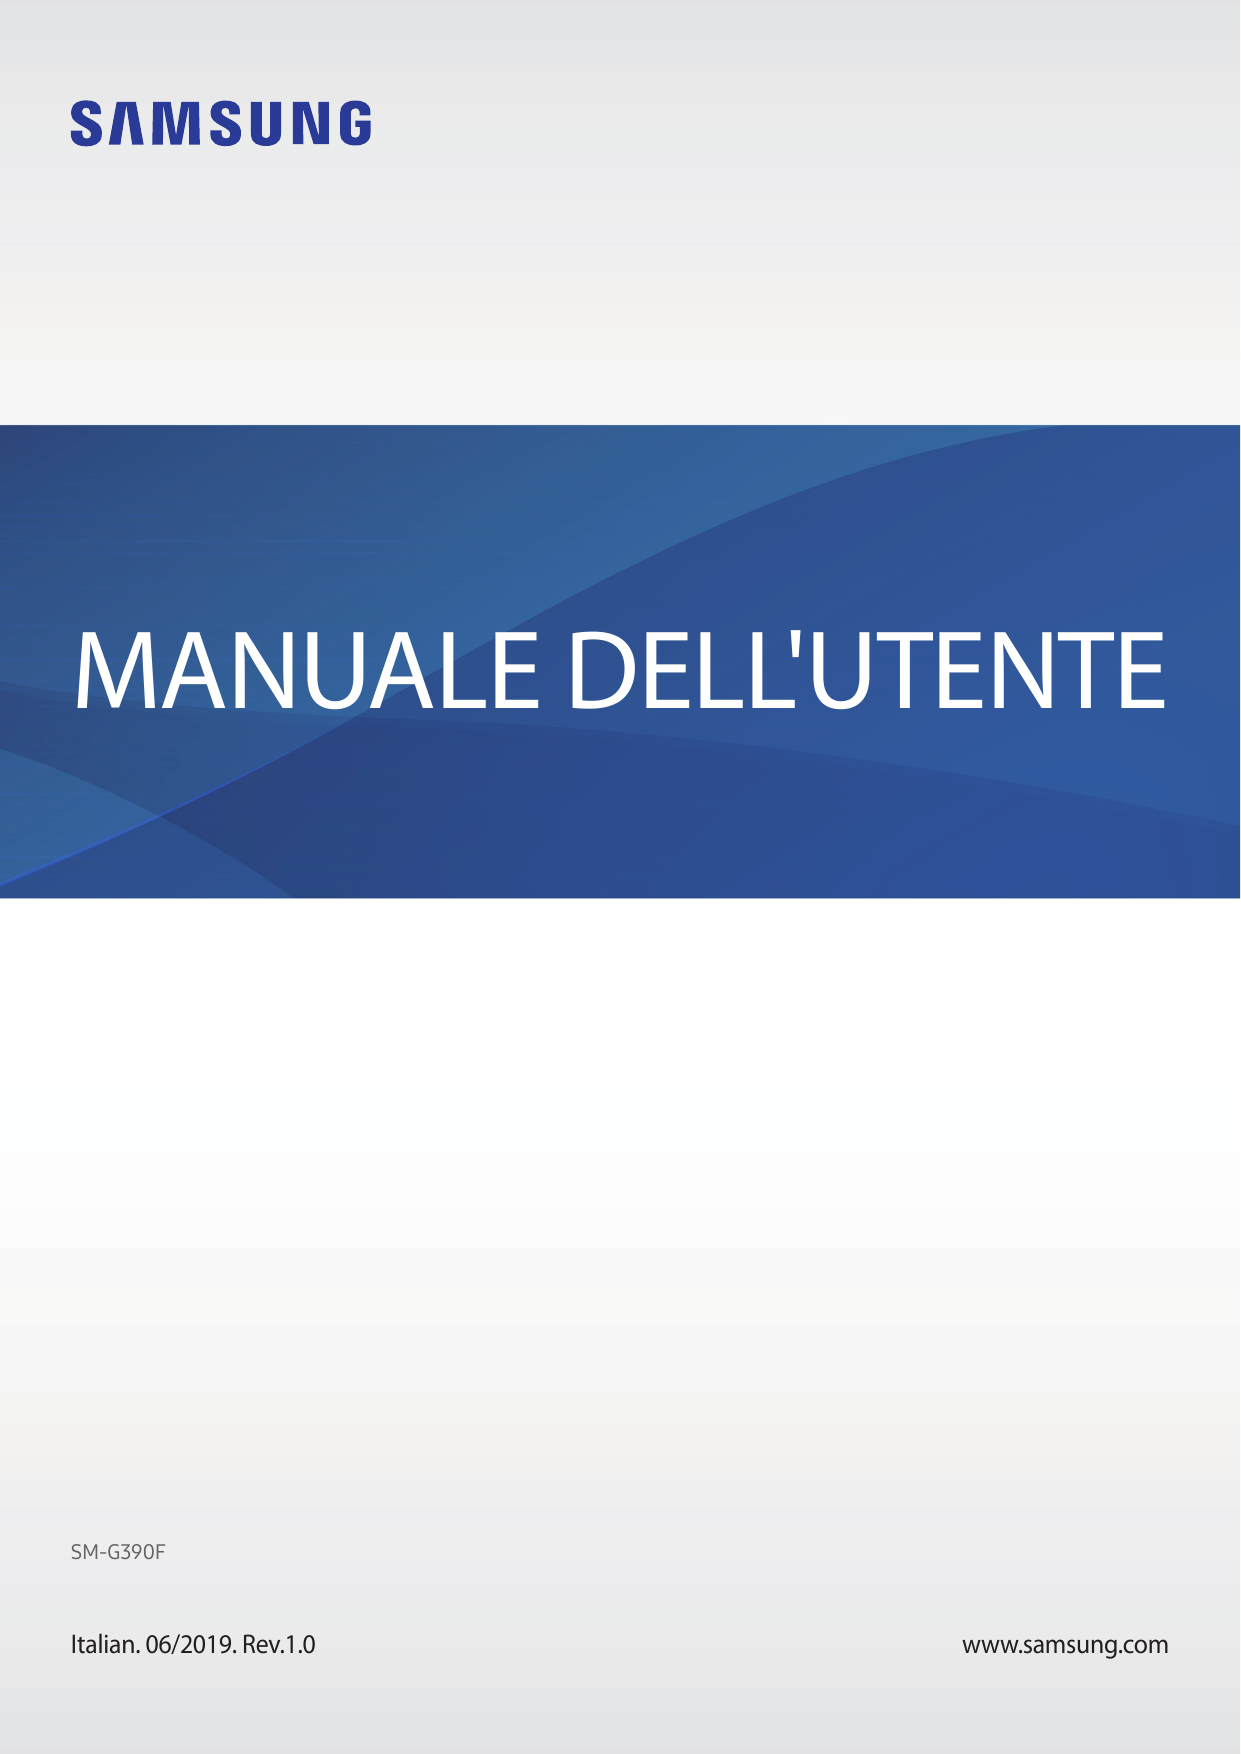 MANUALE DELL'UTENTESM-G390FItalian. 06/2019. Rev.1.0www.samsung.com